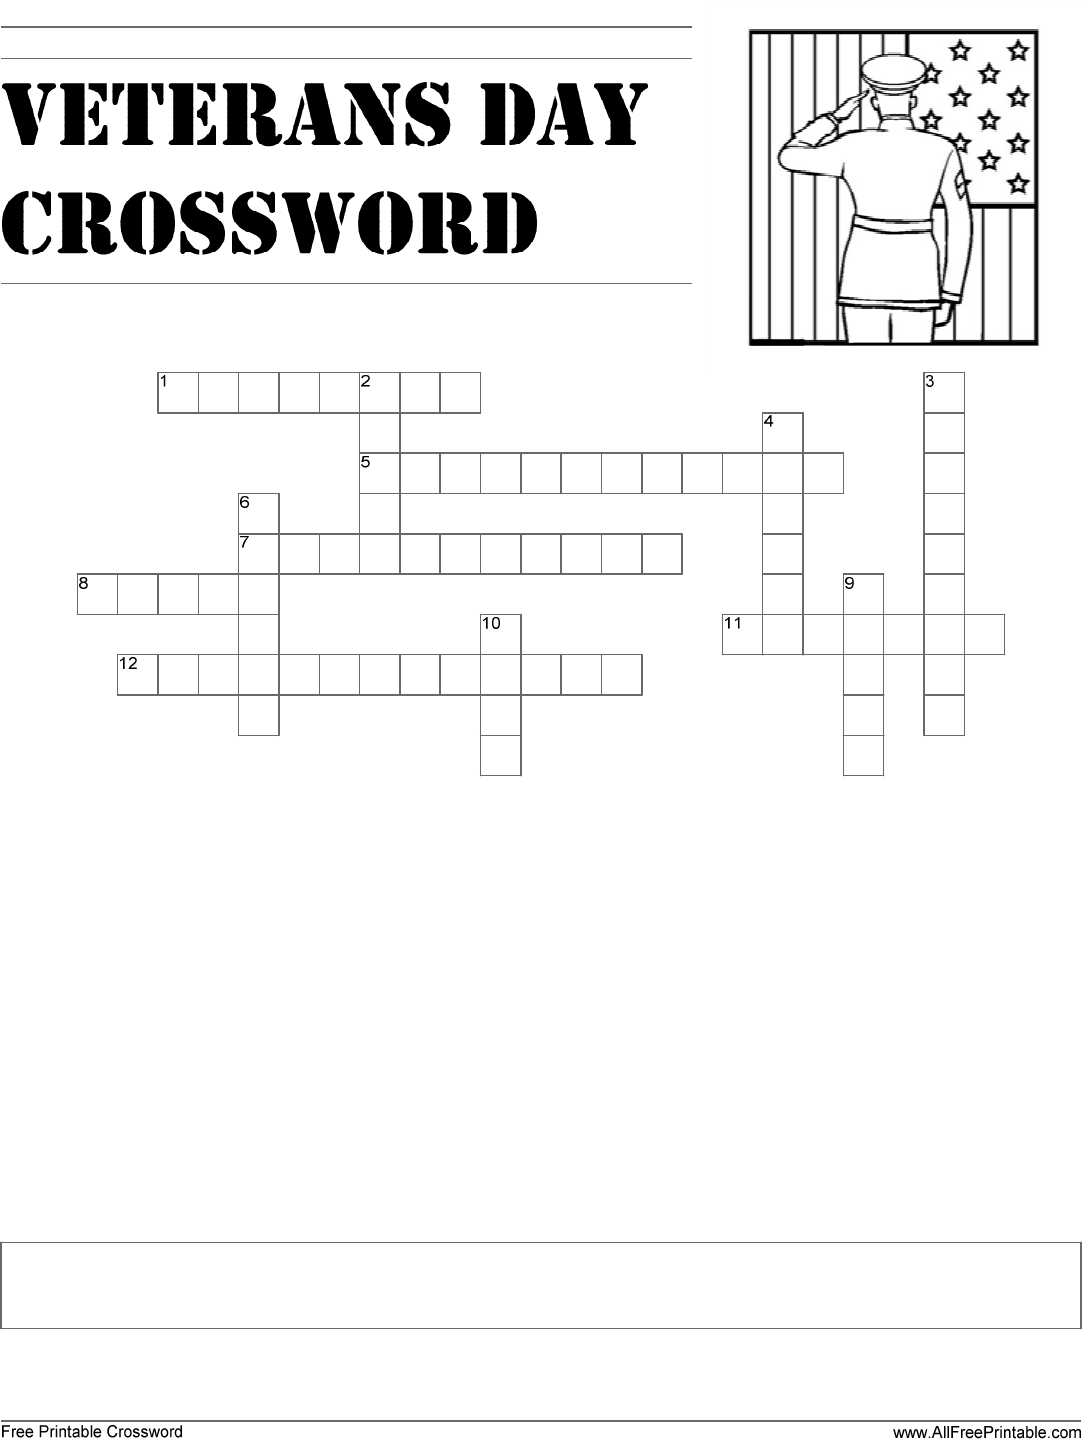 preview-veterans-day-crossword